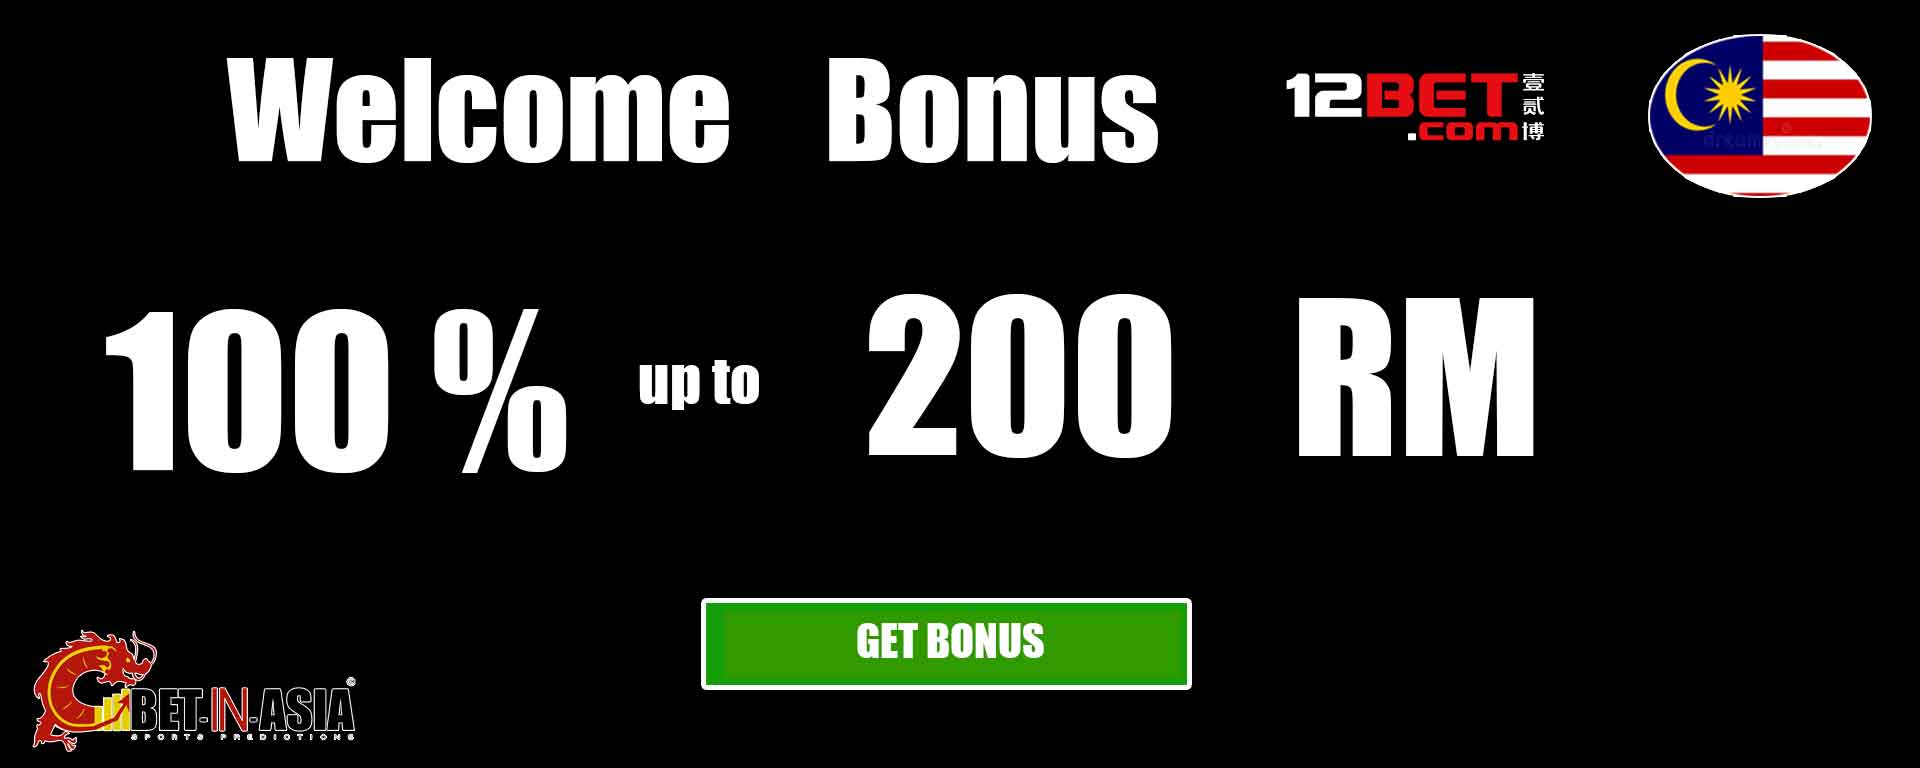 12bet Asia welcome bonus 100 % on first deposit